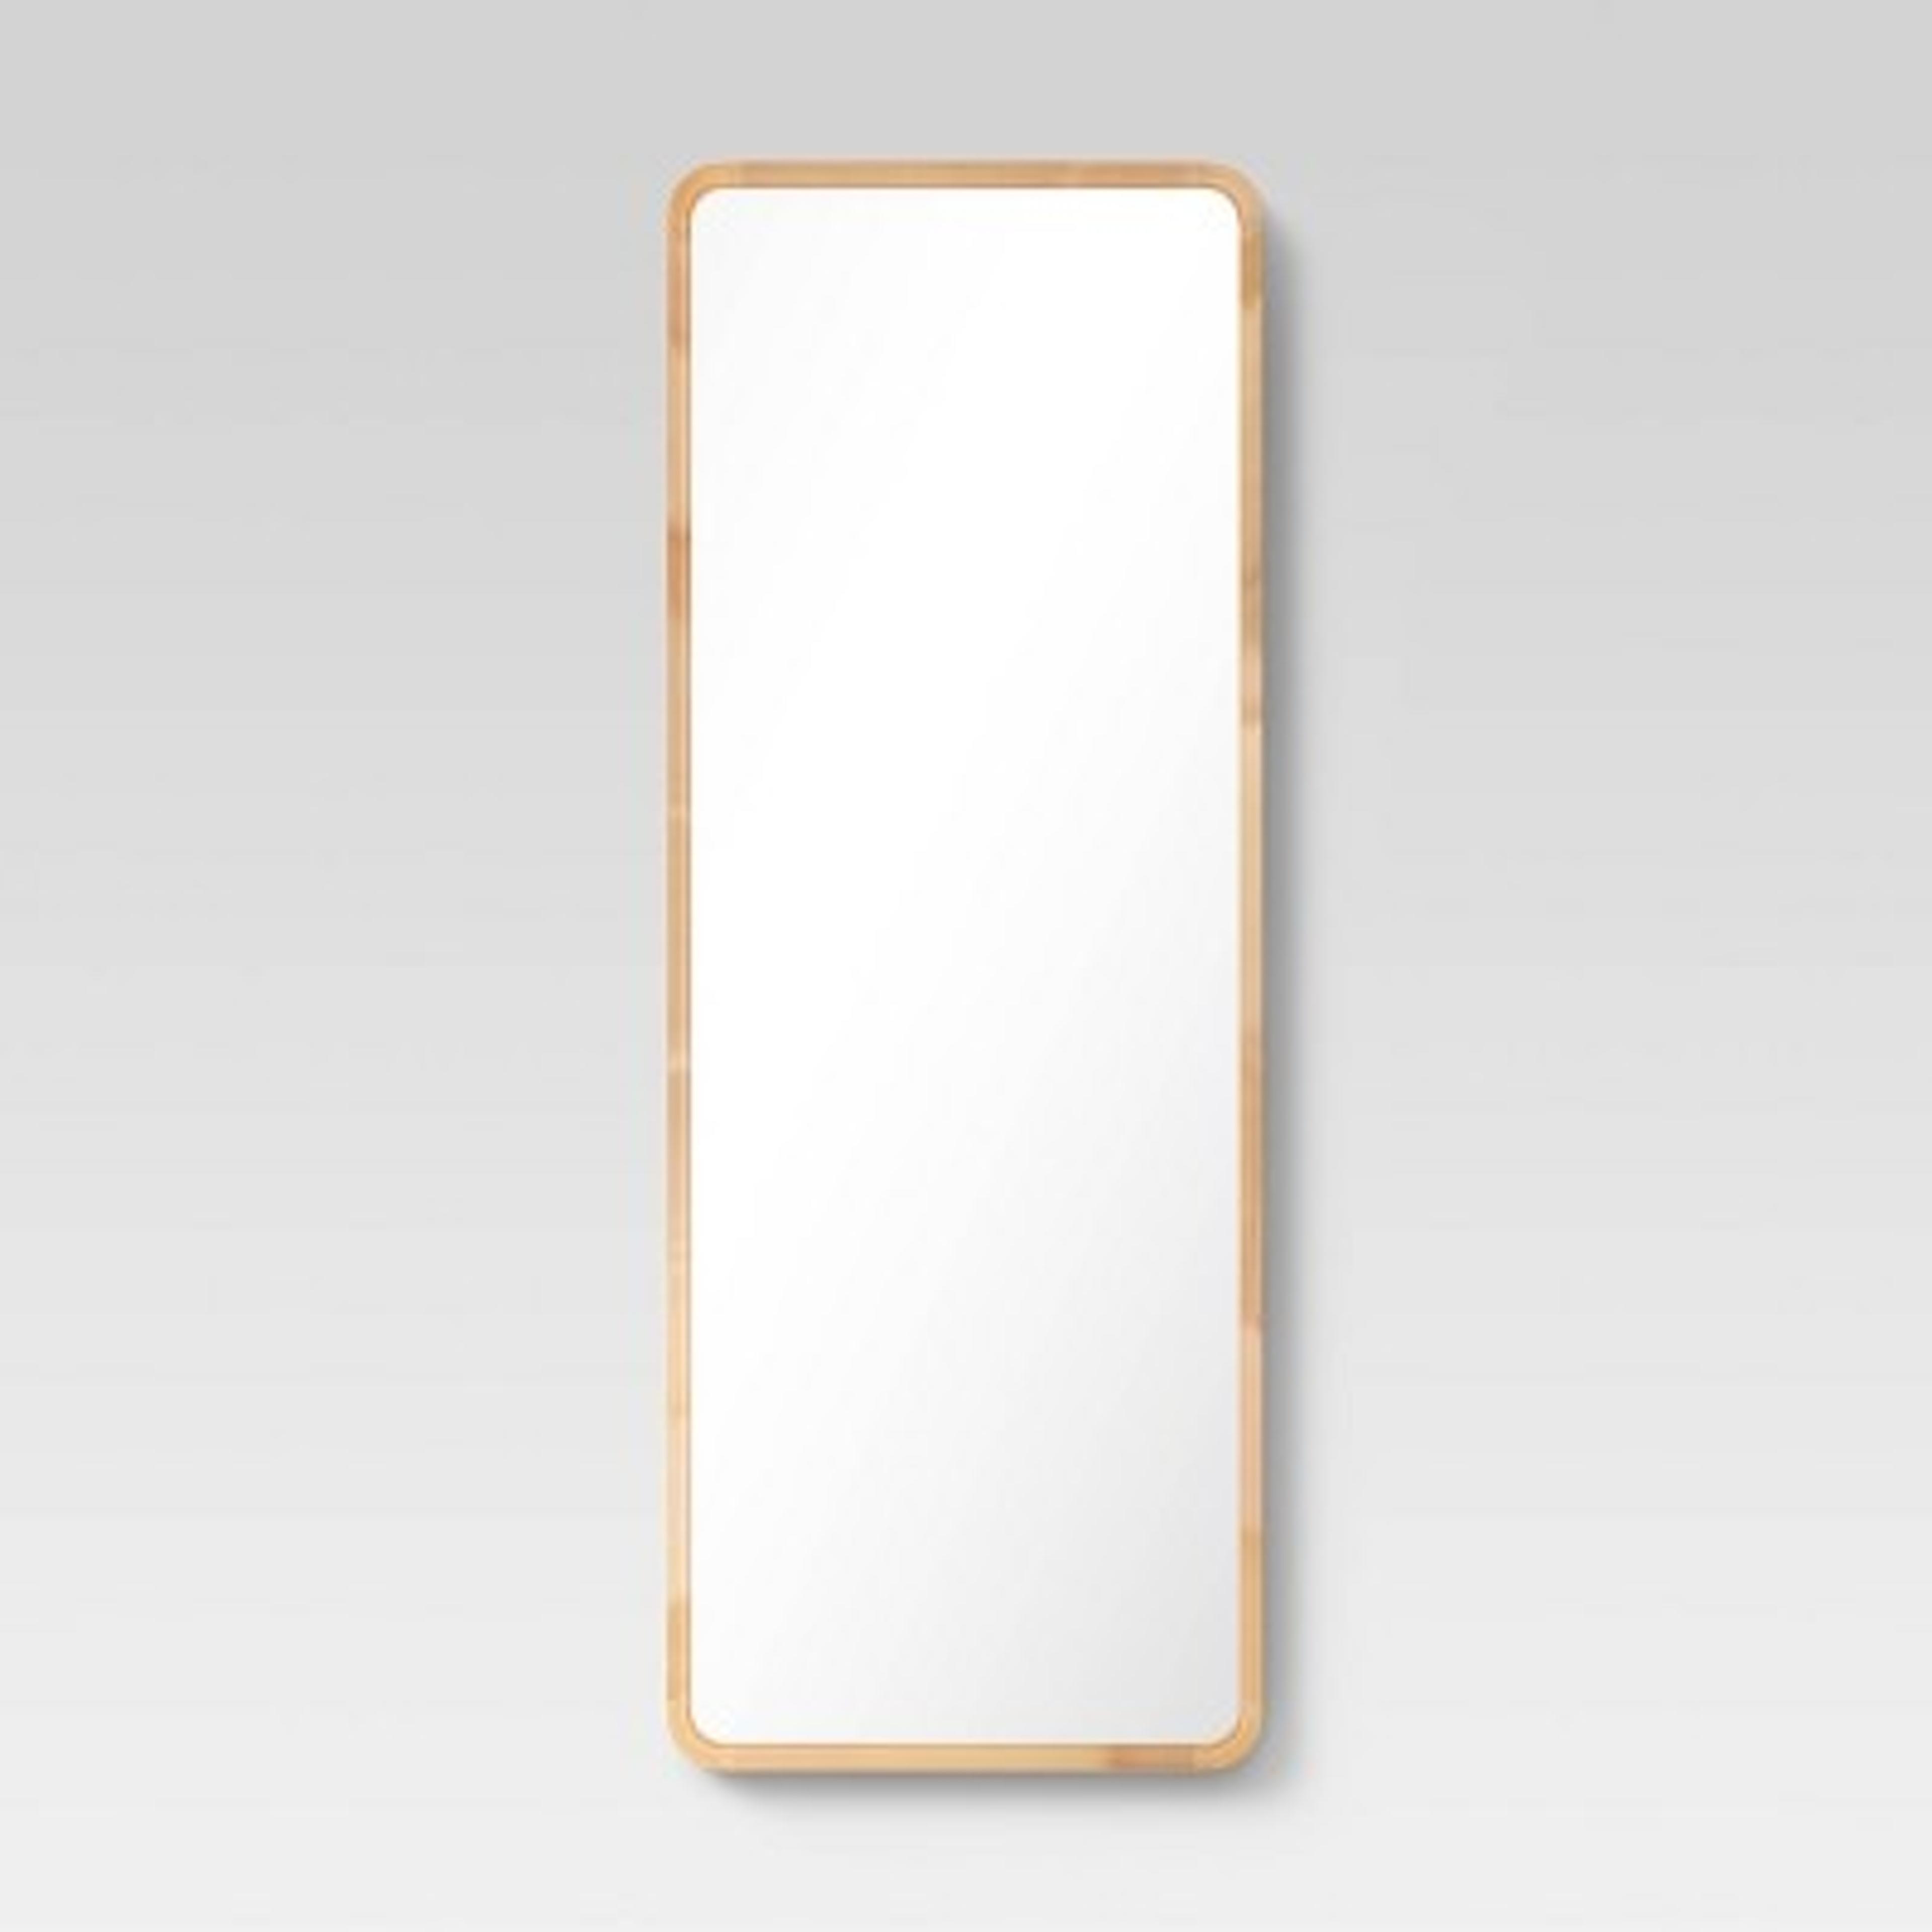 22" X 60" Wood Leaner Mirror - Threshold™ : Target